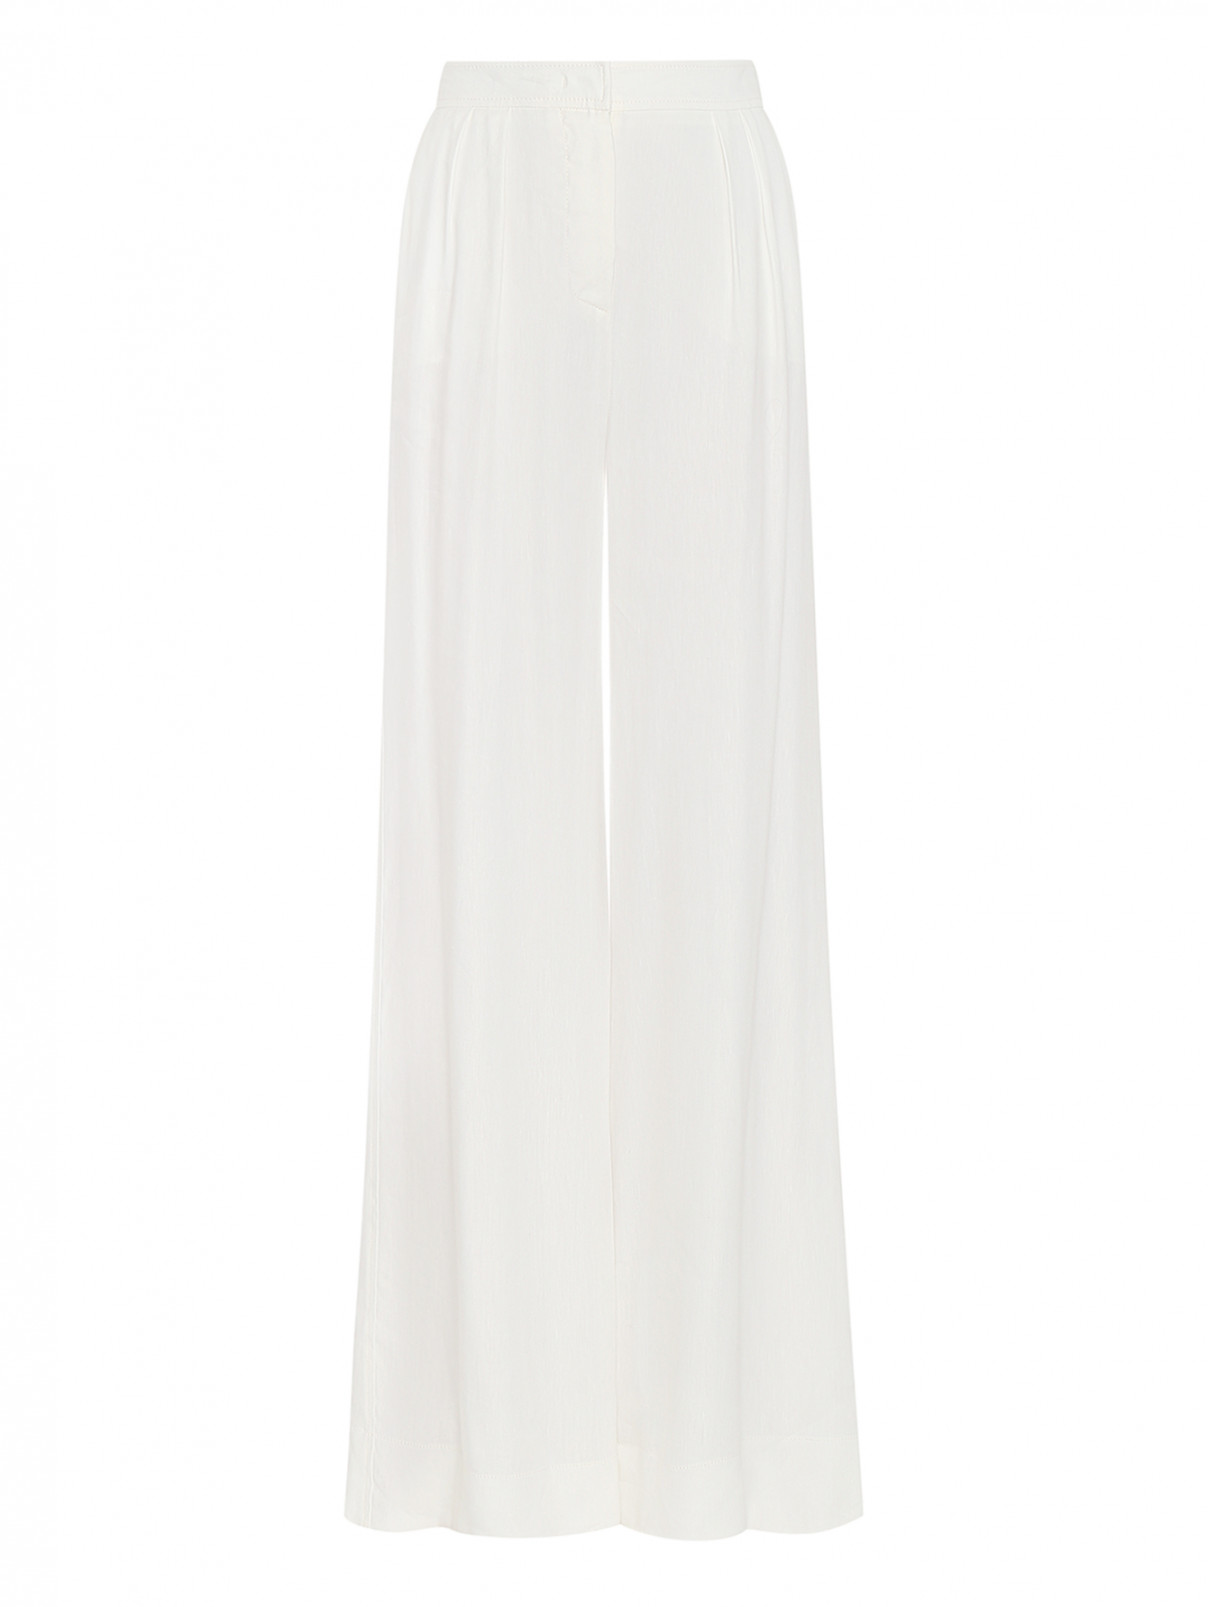 Однотонные брюки широкого кроя Alberta Ferretti  –  Общий вид  – Цвет:  Белый